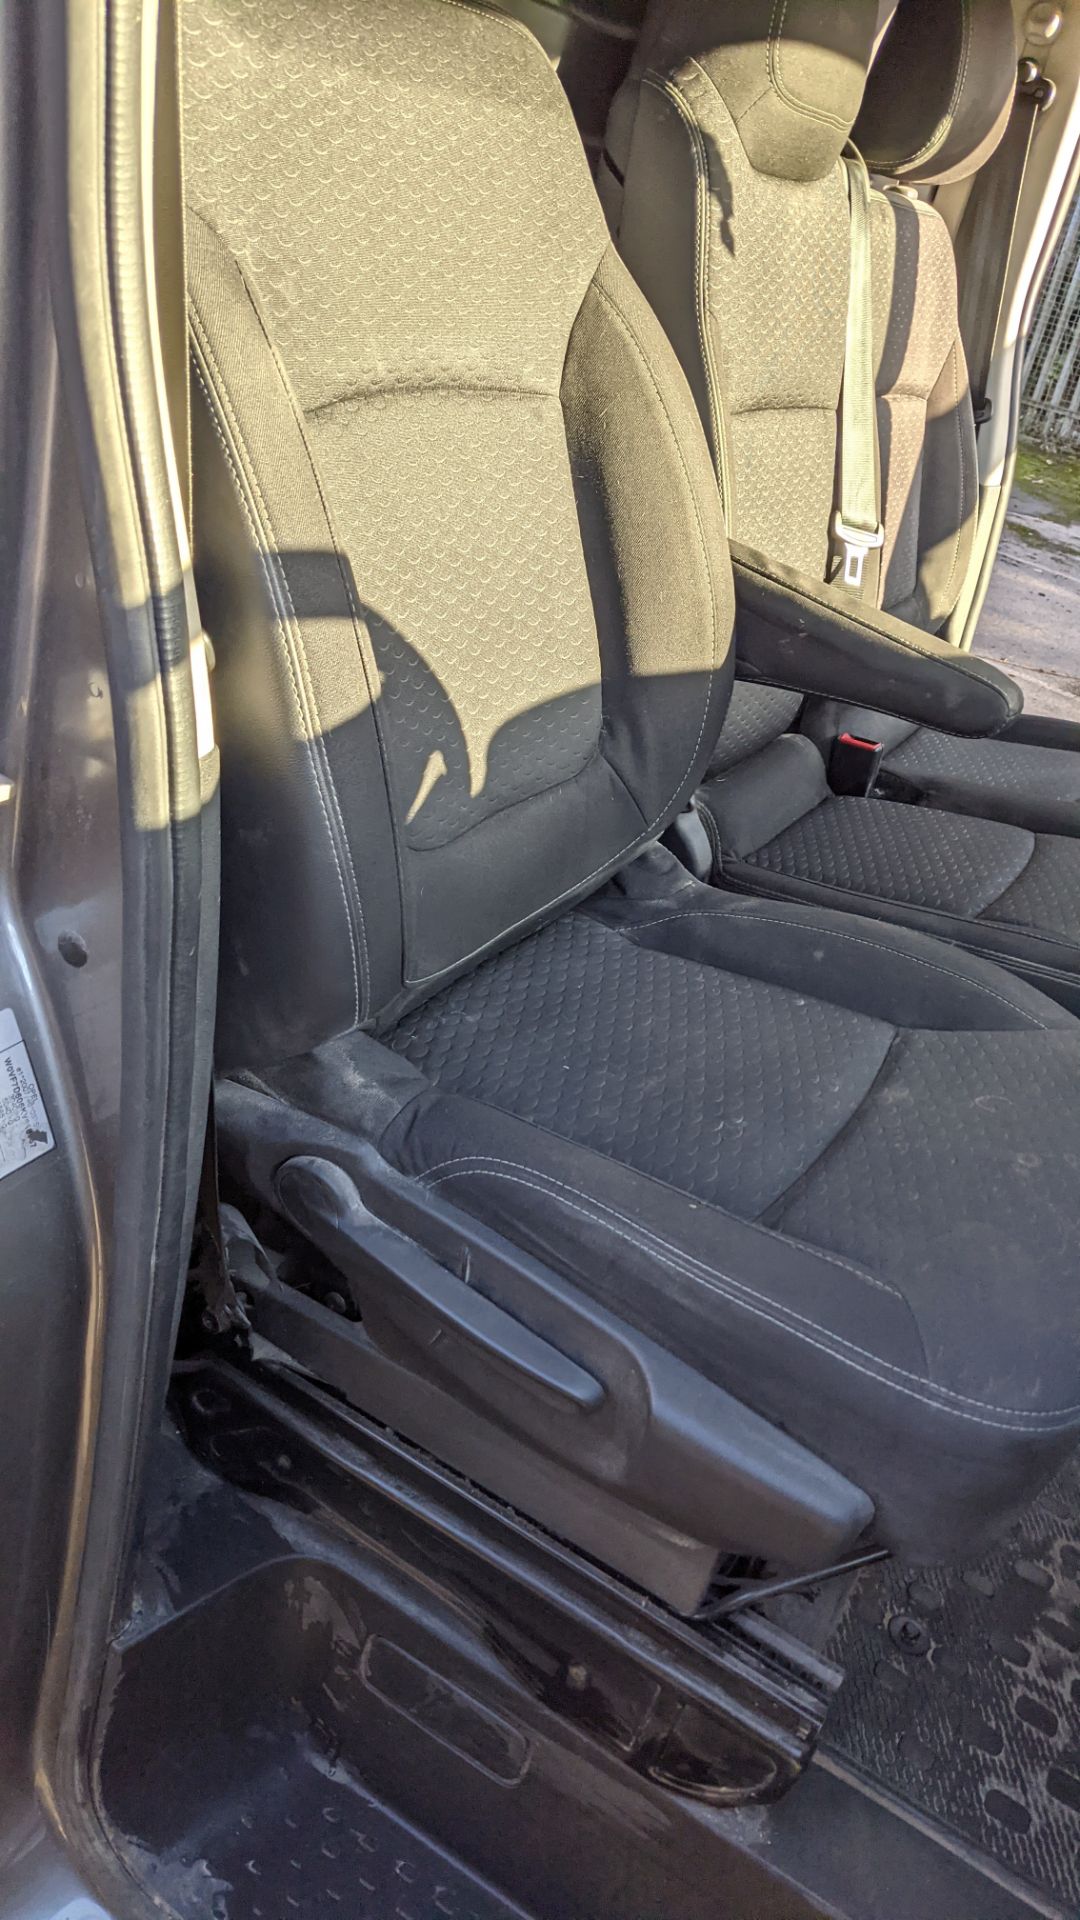 2019 Vauxhall Vivaro L2 2900 Sport CDTI BT SS panel van (Registration FD19 YUB) - Image 49 of 55